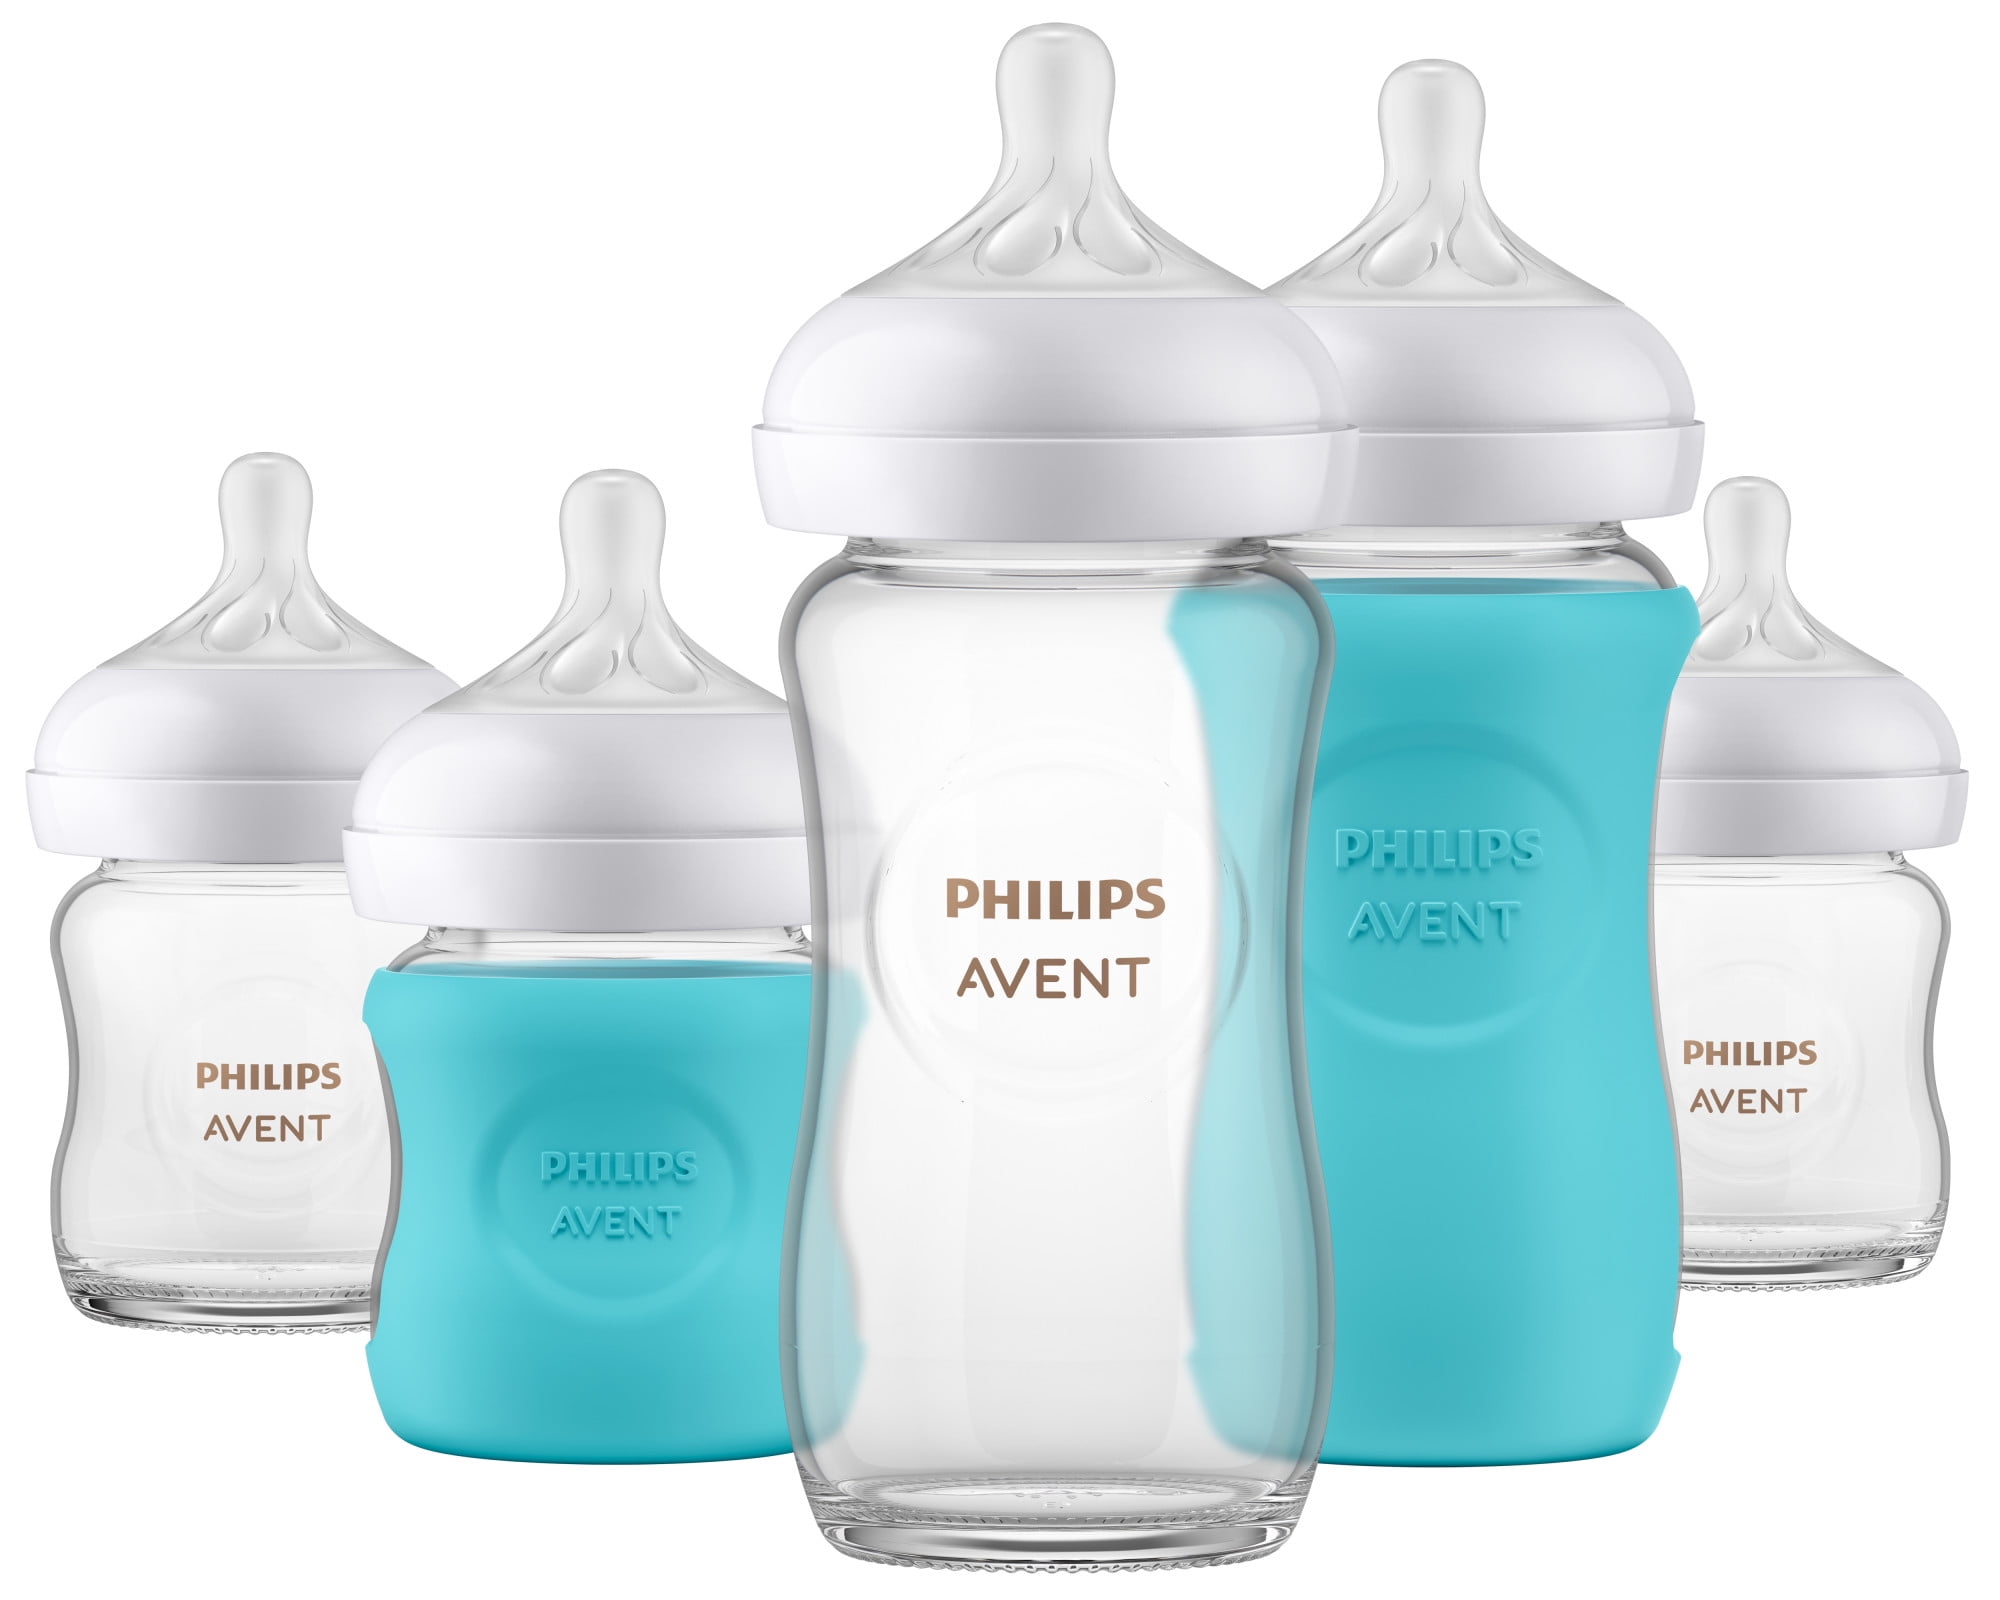 Avent - Glass Natural Bottle Baby Set